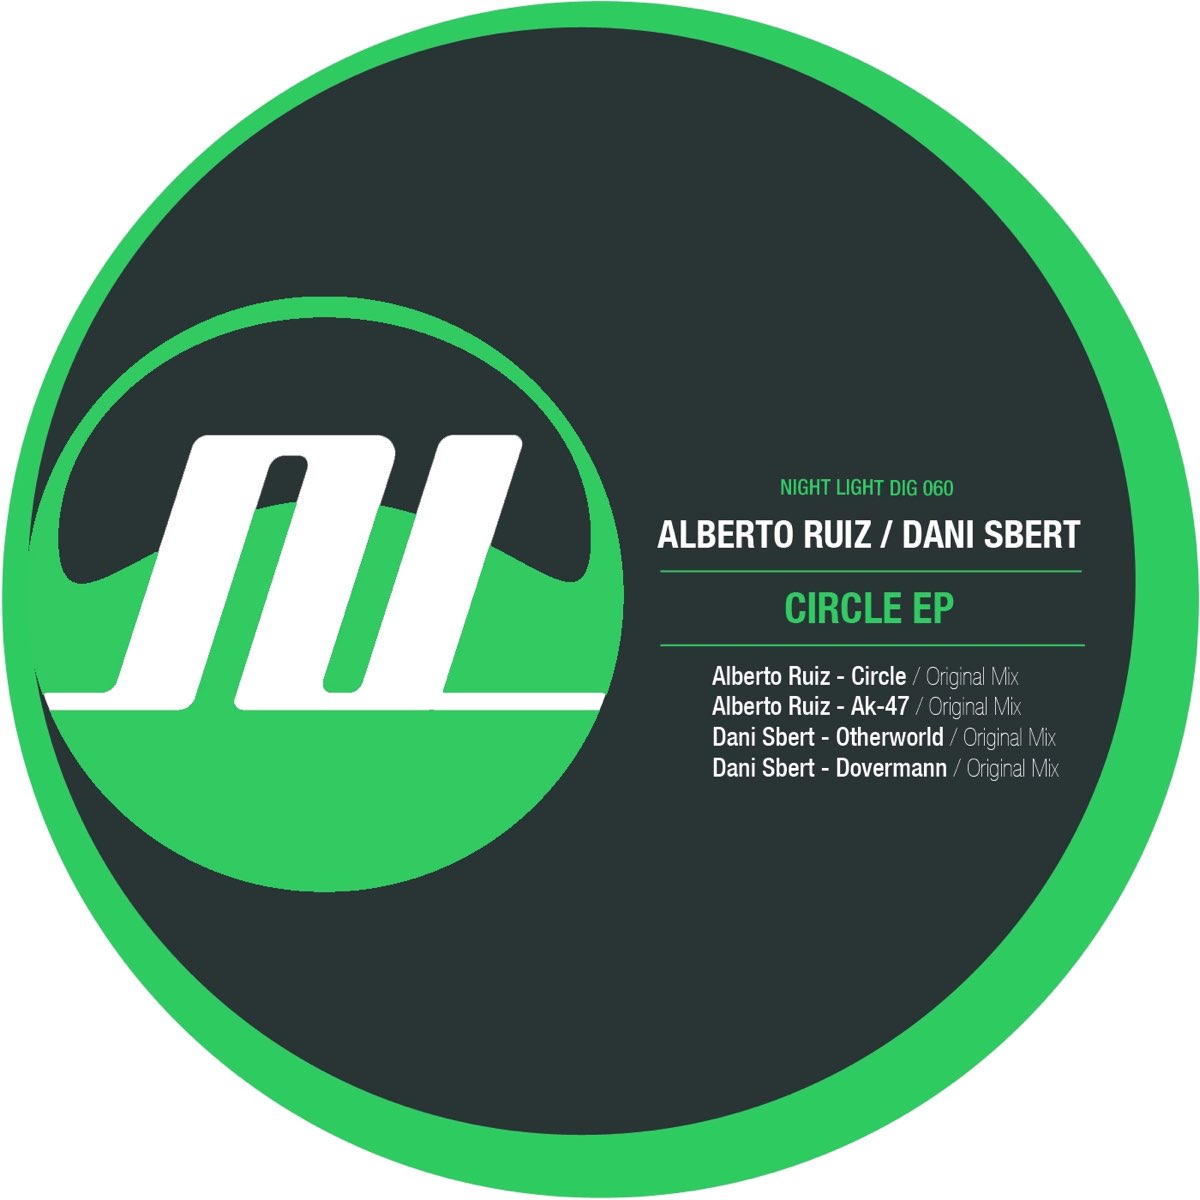 Sbert. Alberto Ruiz line Mass. Dani Sbert resolved problem (Original Mix). Alberto Ruiz Chesterfield Original Mix // Numen. SBERTIME.